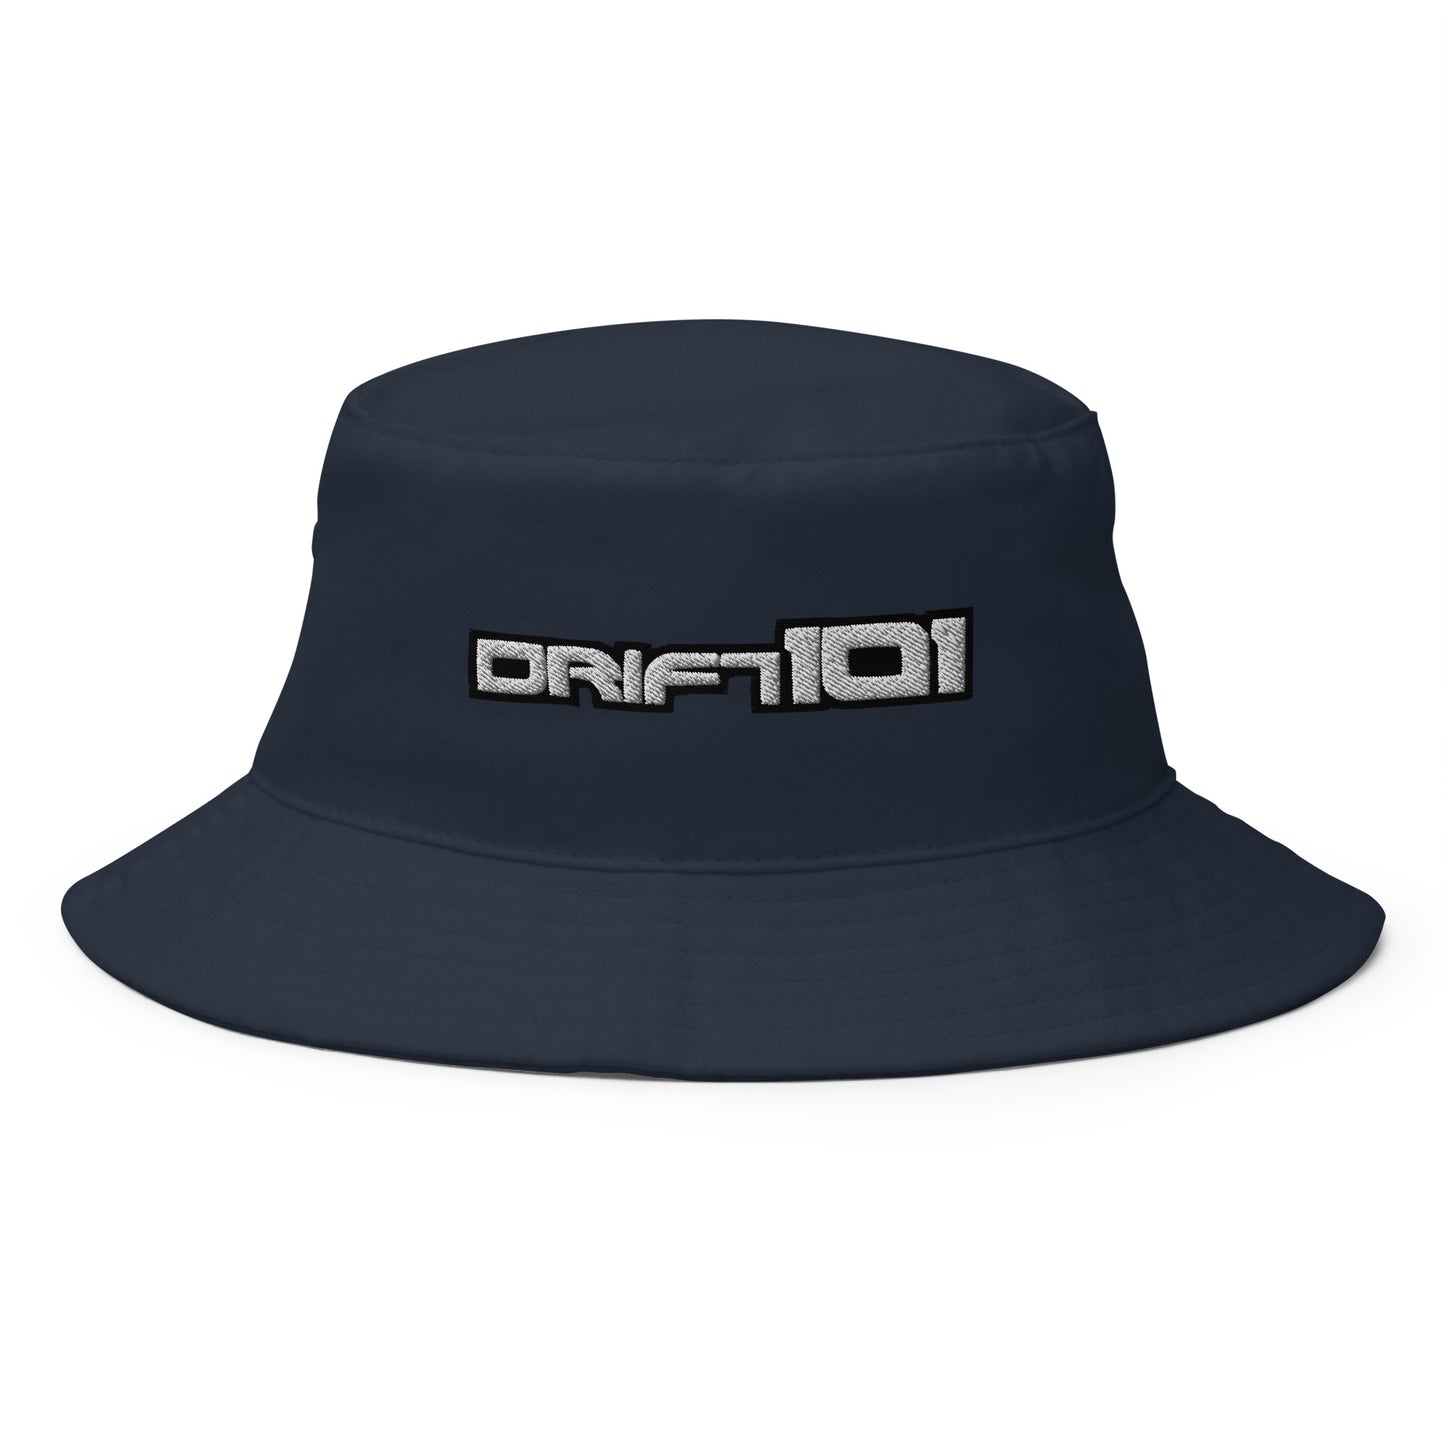 Drift 101 Bucket Hat